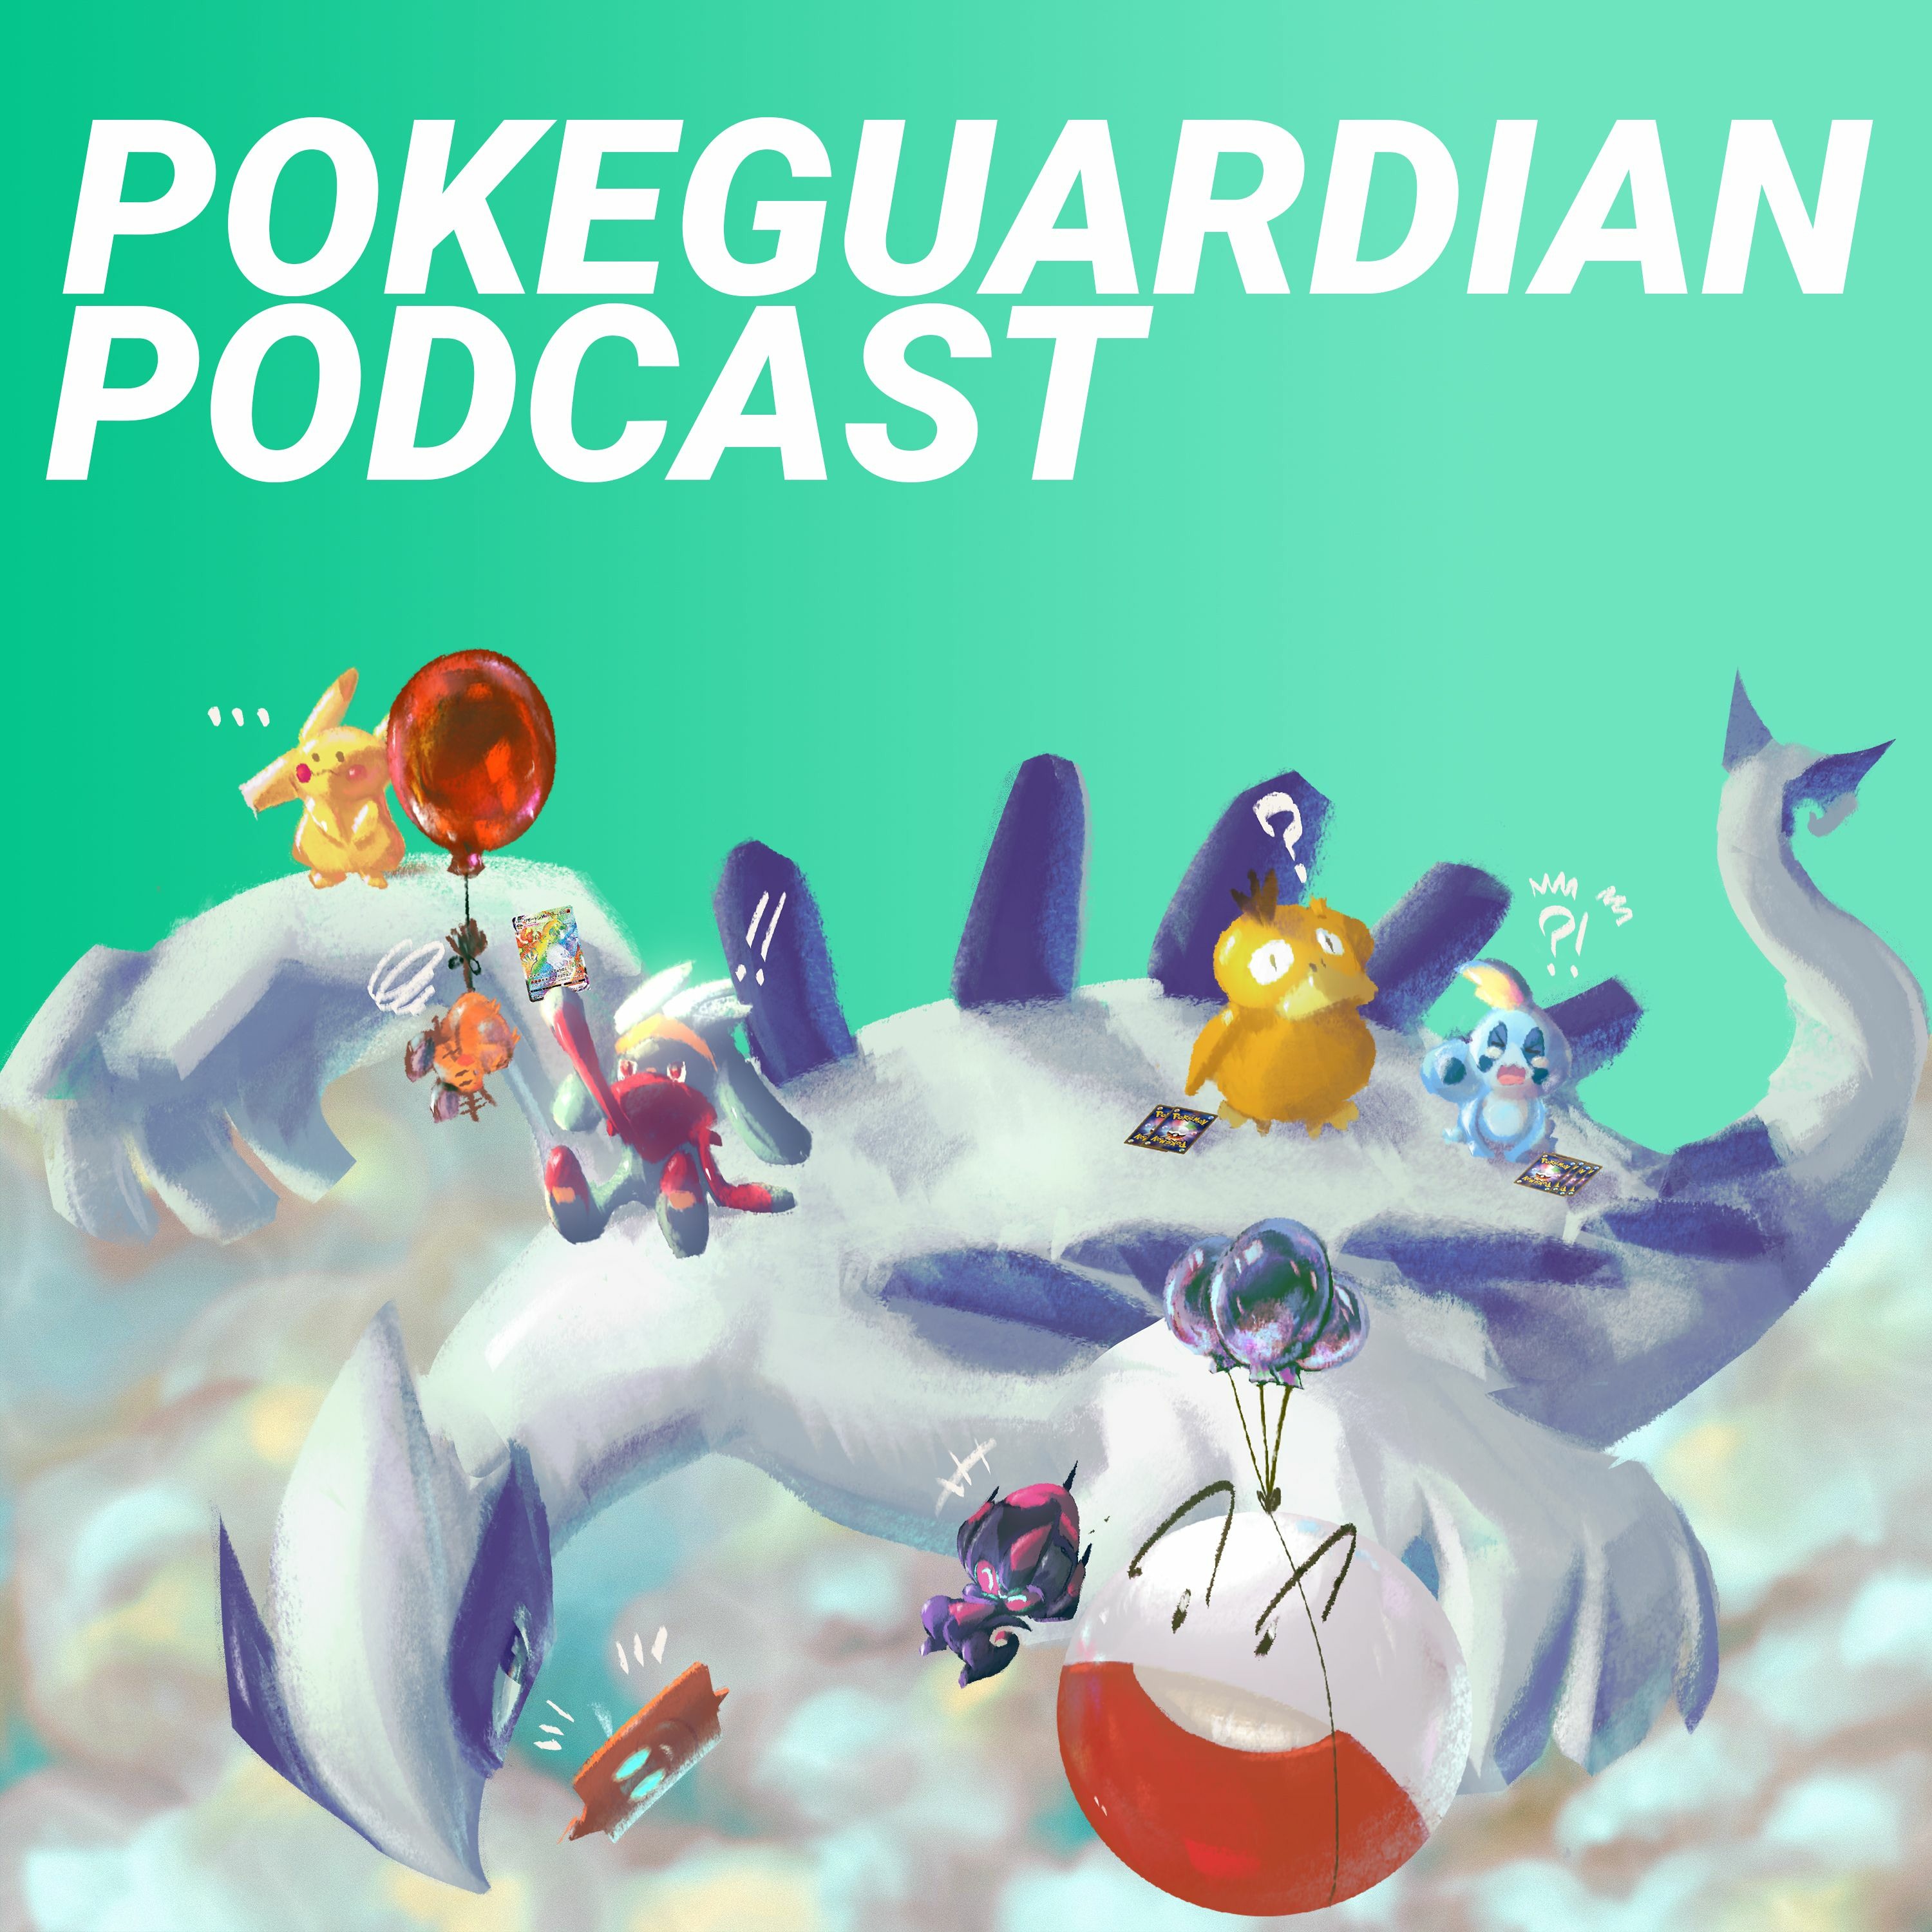 PokeGuardian Podcast #40 - Pokemon Card 151 Launch & 9.7 Billion Pokemon Cards Sold in 2022/2023